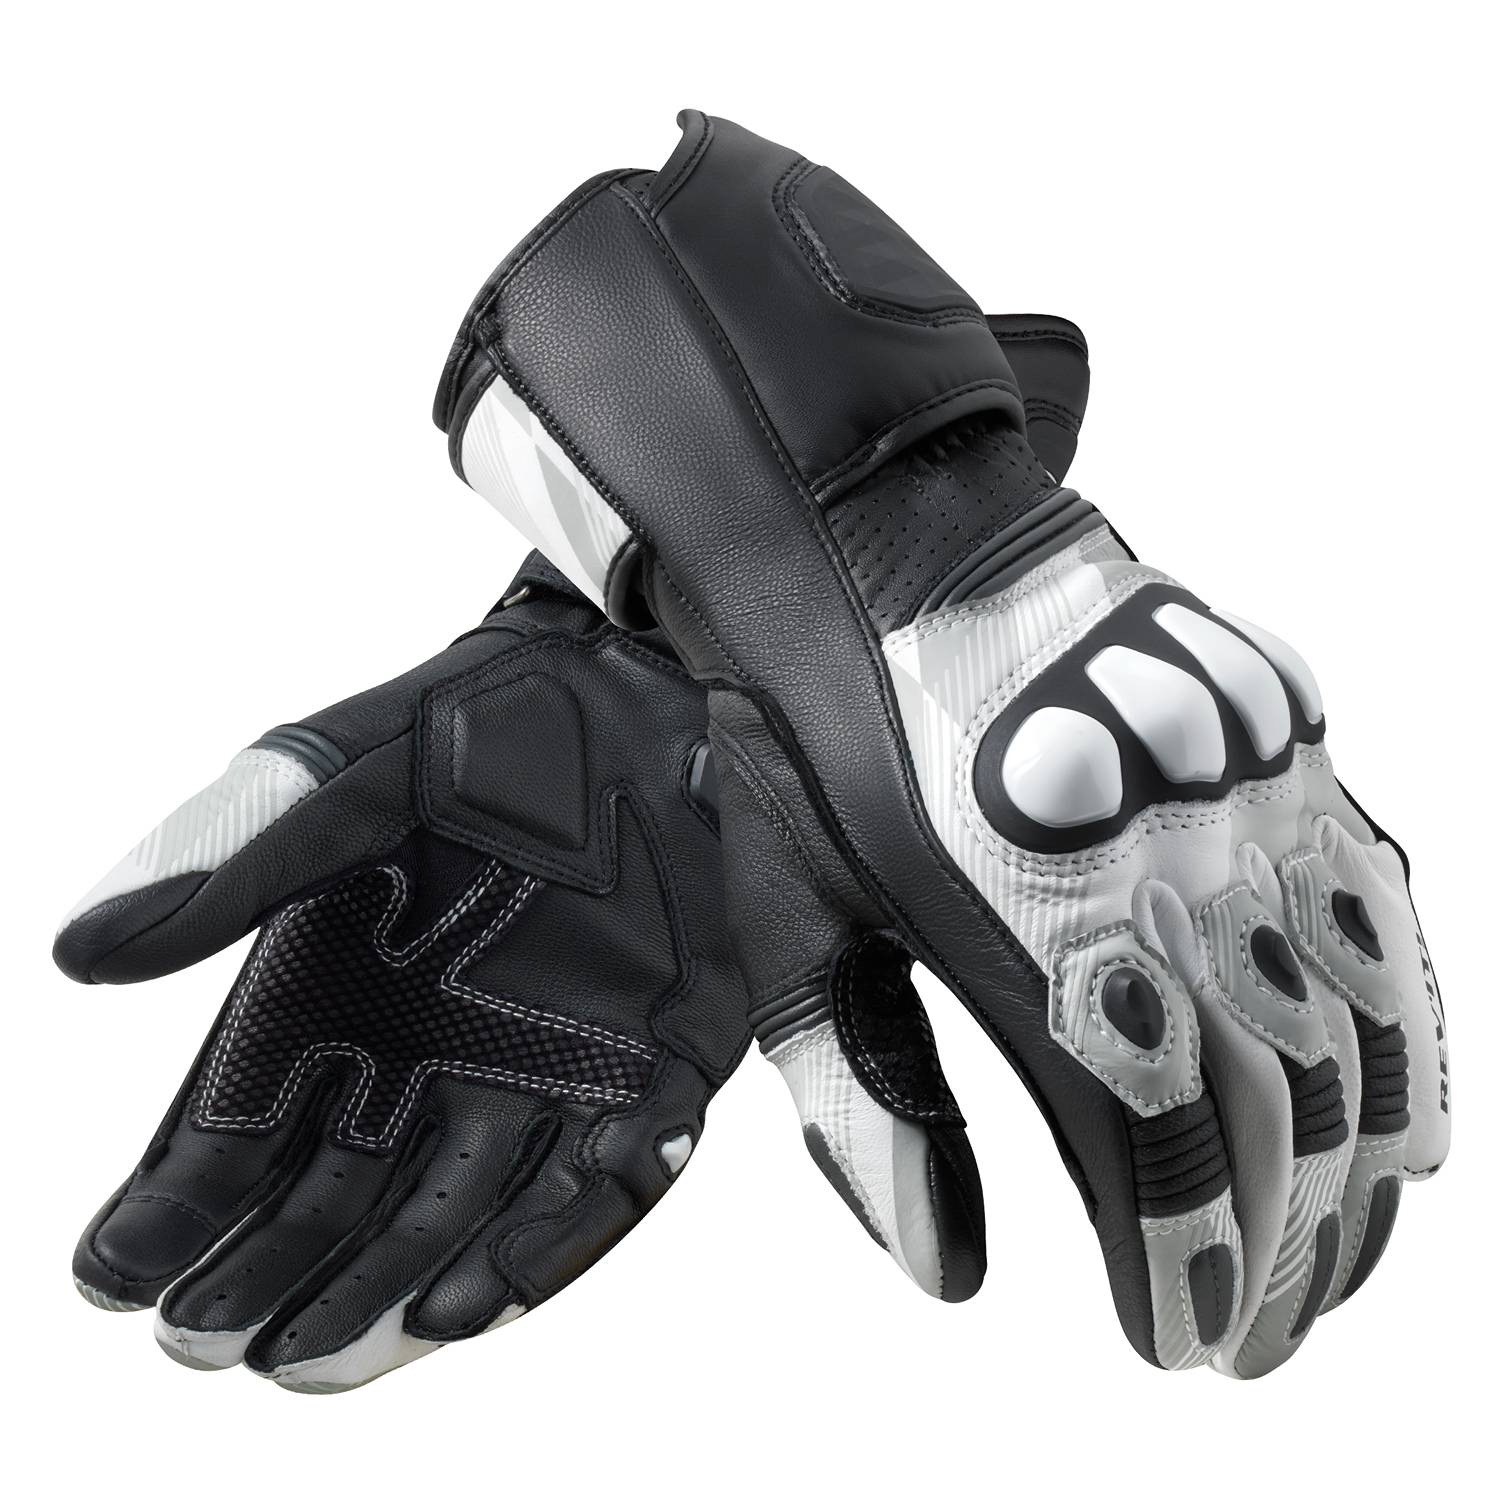 Image of REV'IT! League 2 Gloves Black Grey Size L ID 8700001360685